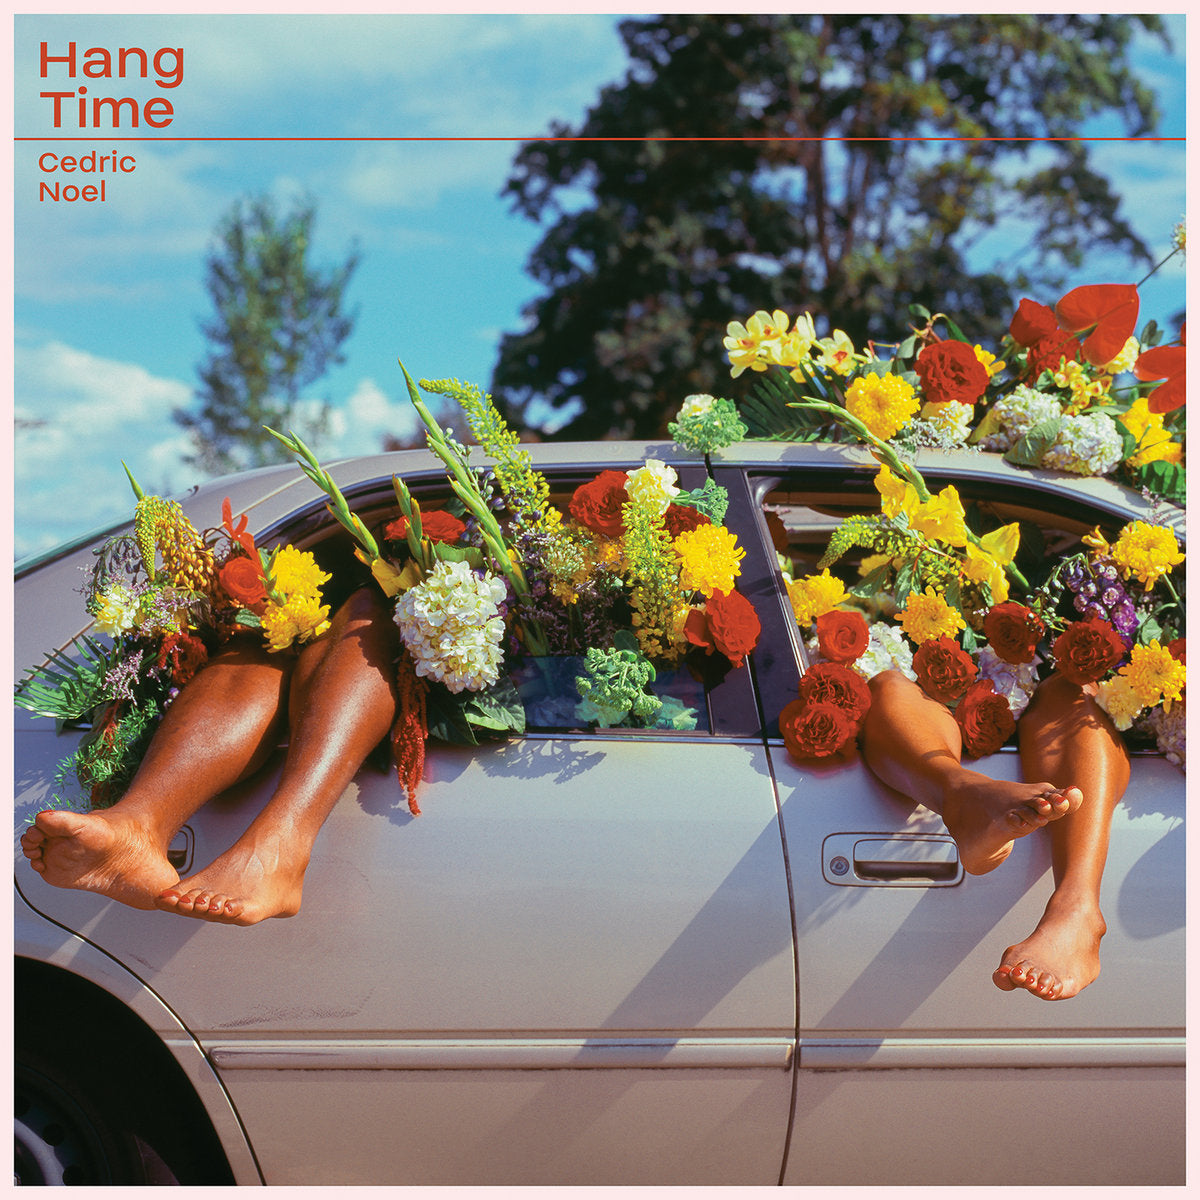 CEDRIC NOEL - HANG TIME Vinyl LP